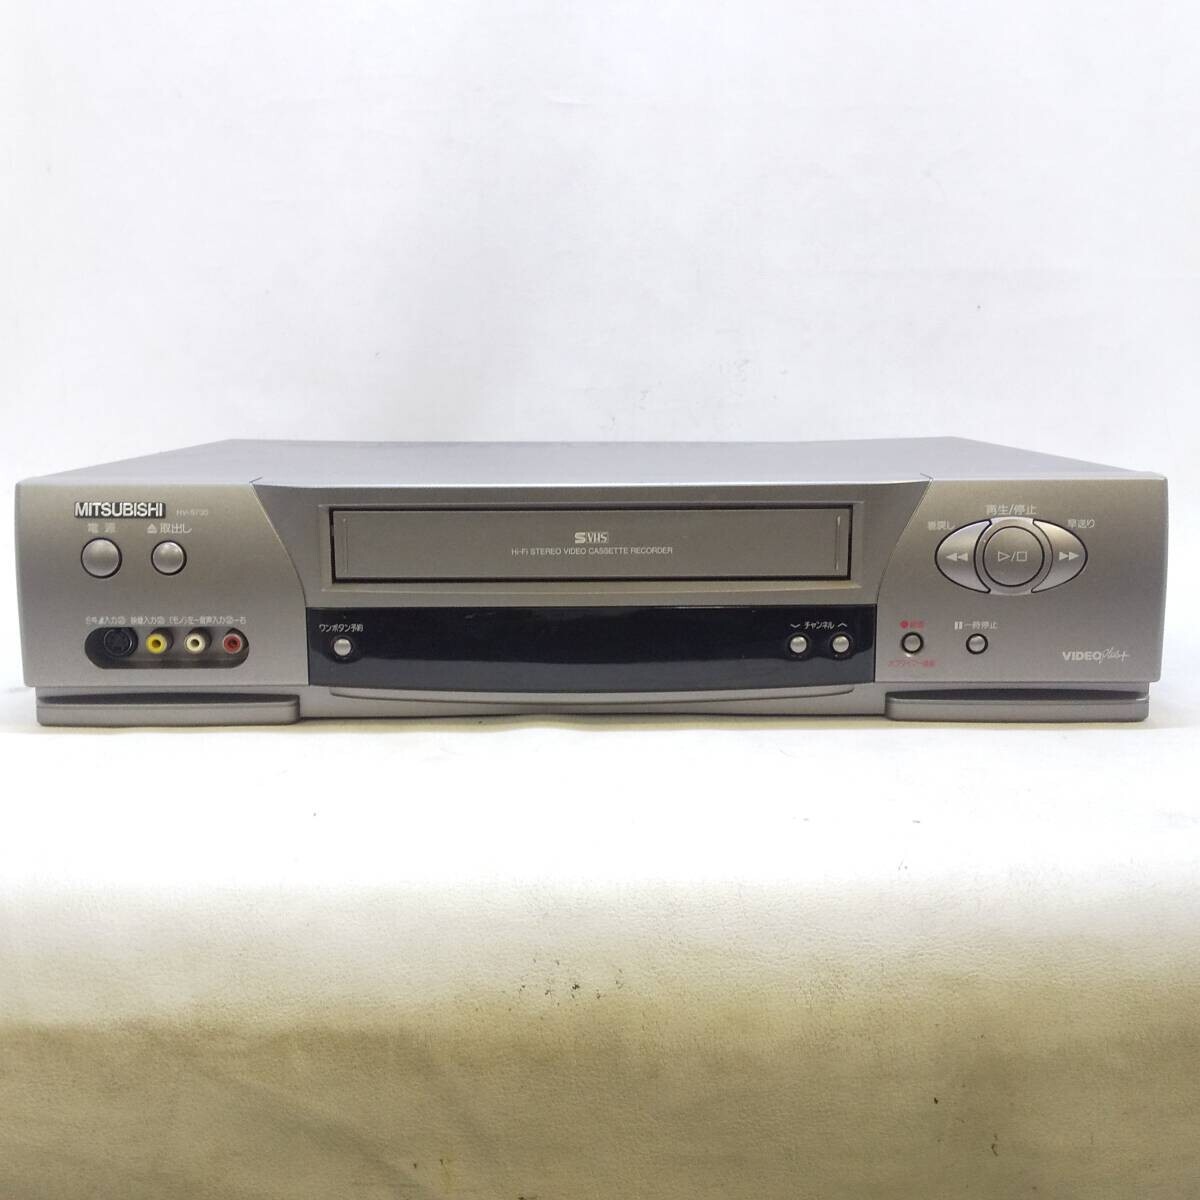 ◆MITSUBISHI 三菱 S-VHS ビデオデッキ HV-S730 本体のみ 1997年製 再生確認のみ 現状品◆R2247の画像1